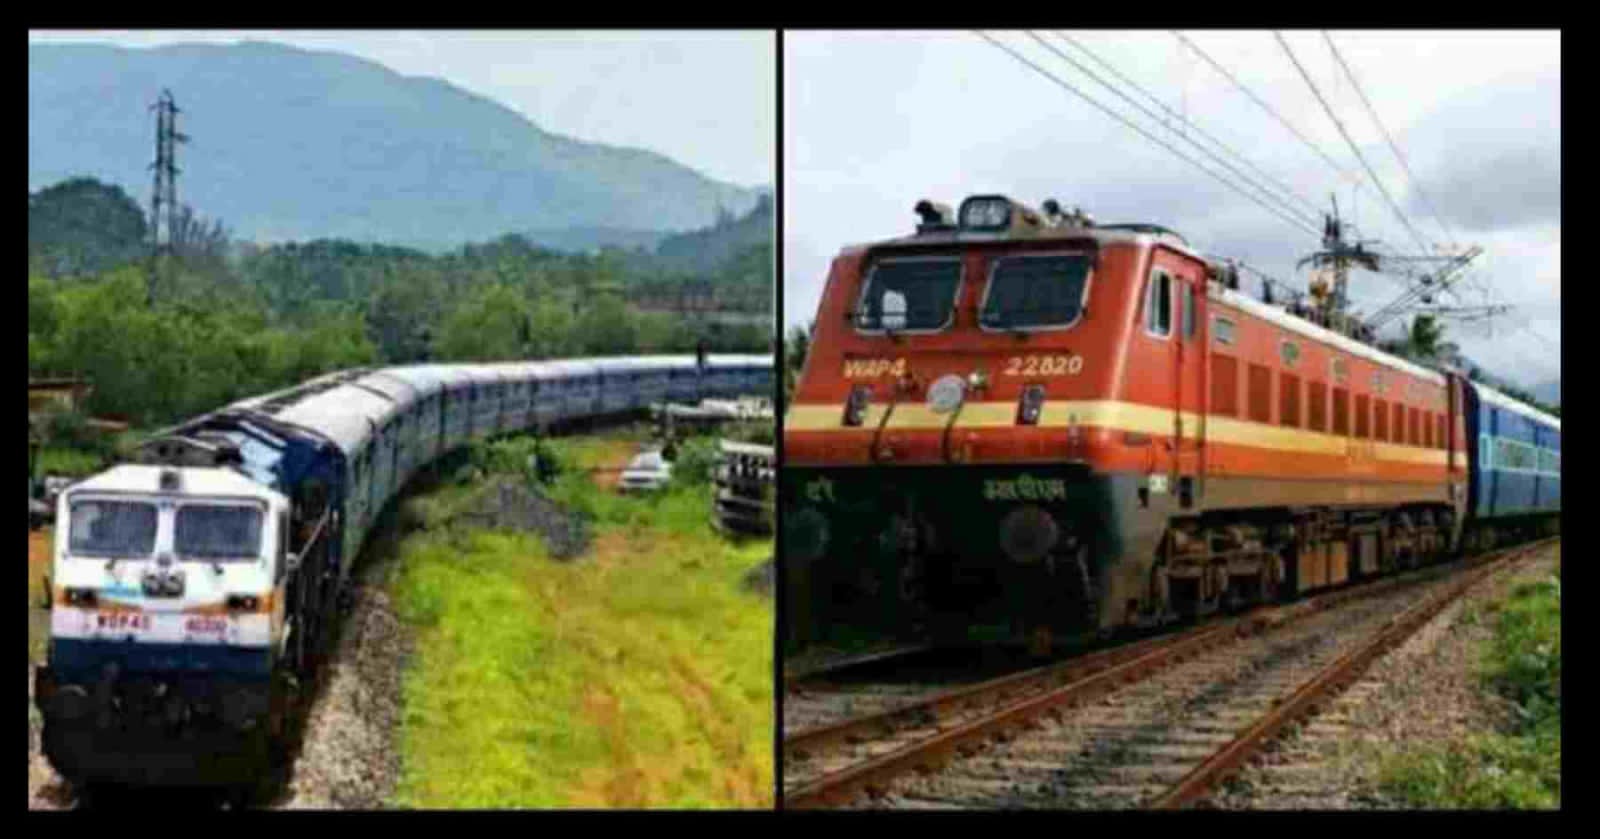 Mumbai Kathgodam weekly train will now run till July 14, operations stopped in June